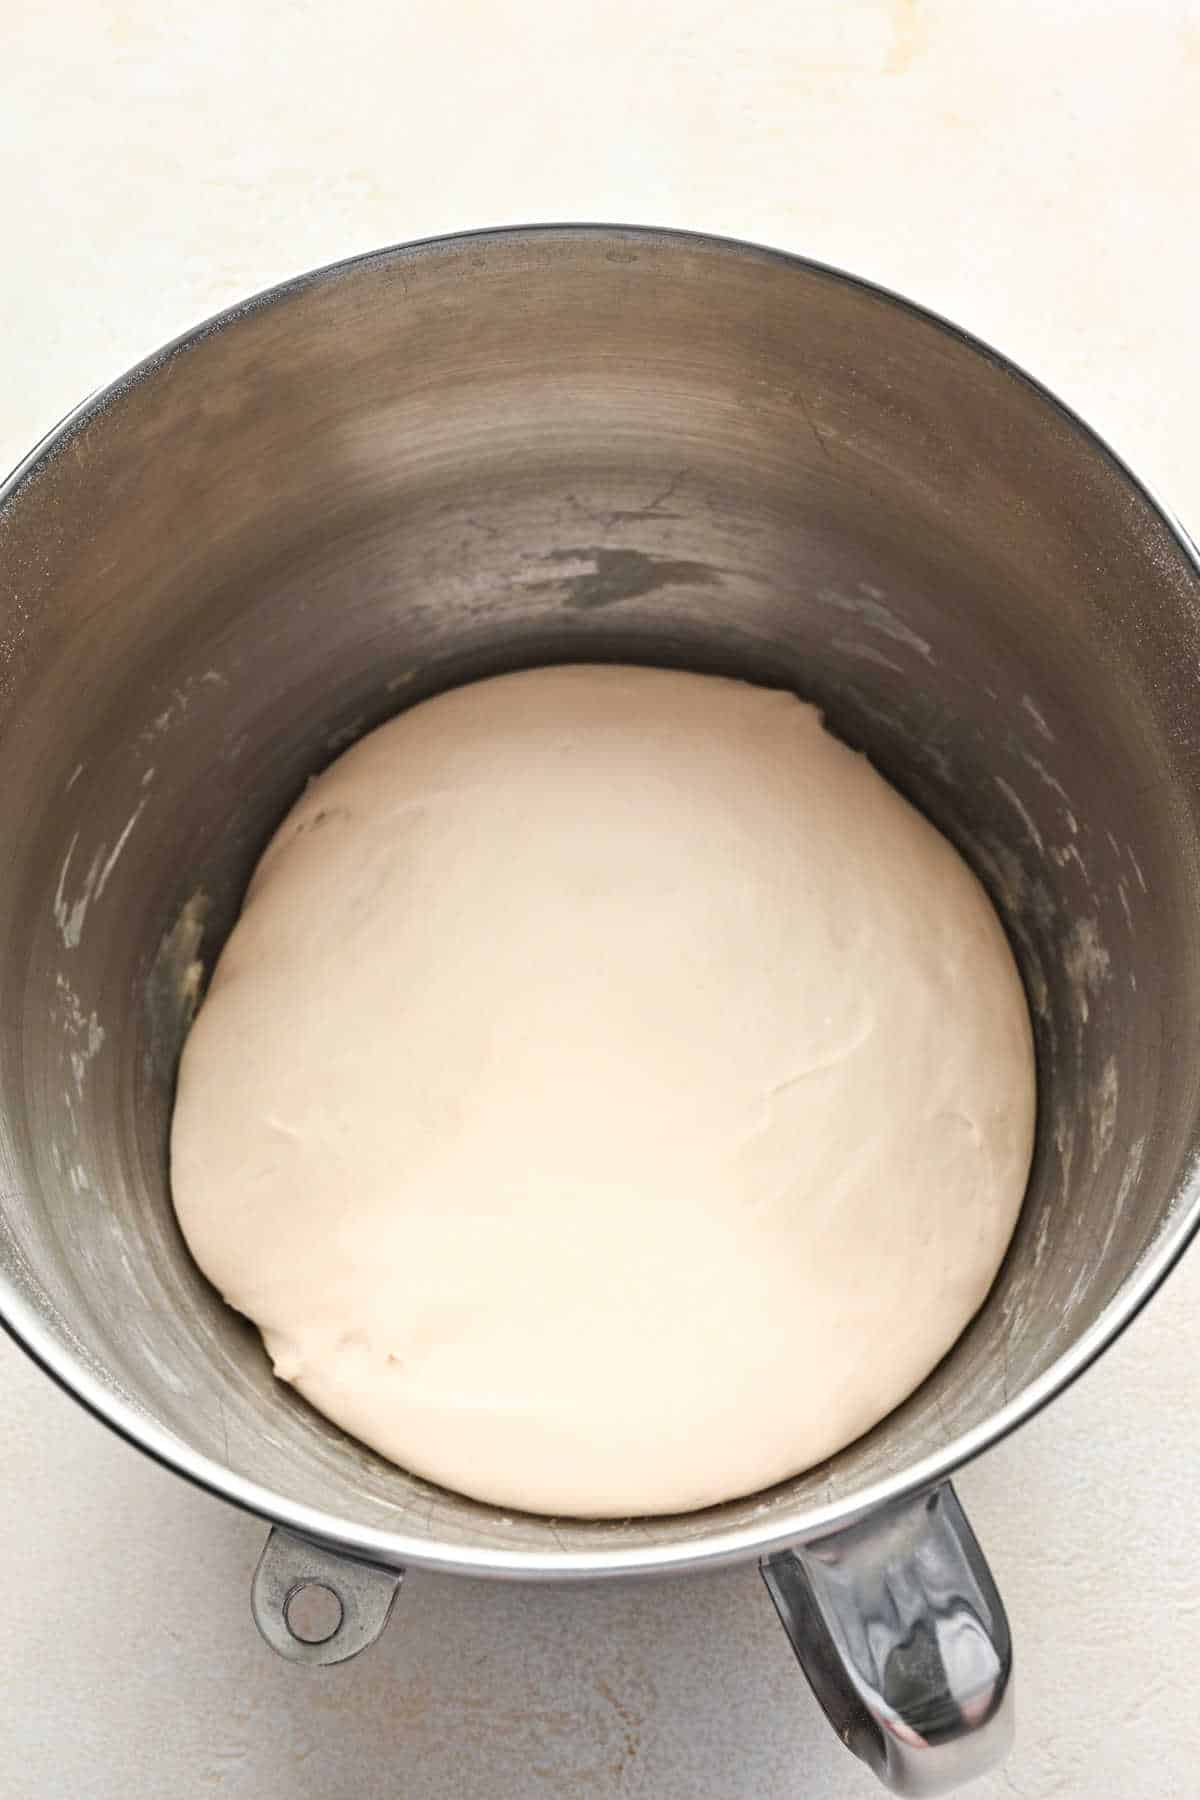 Risen breadstick dough in a silver mixing bowl. 